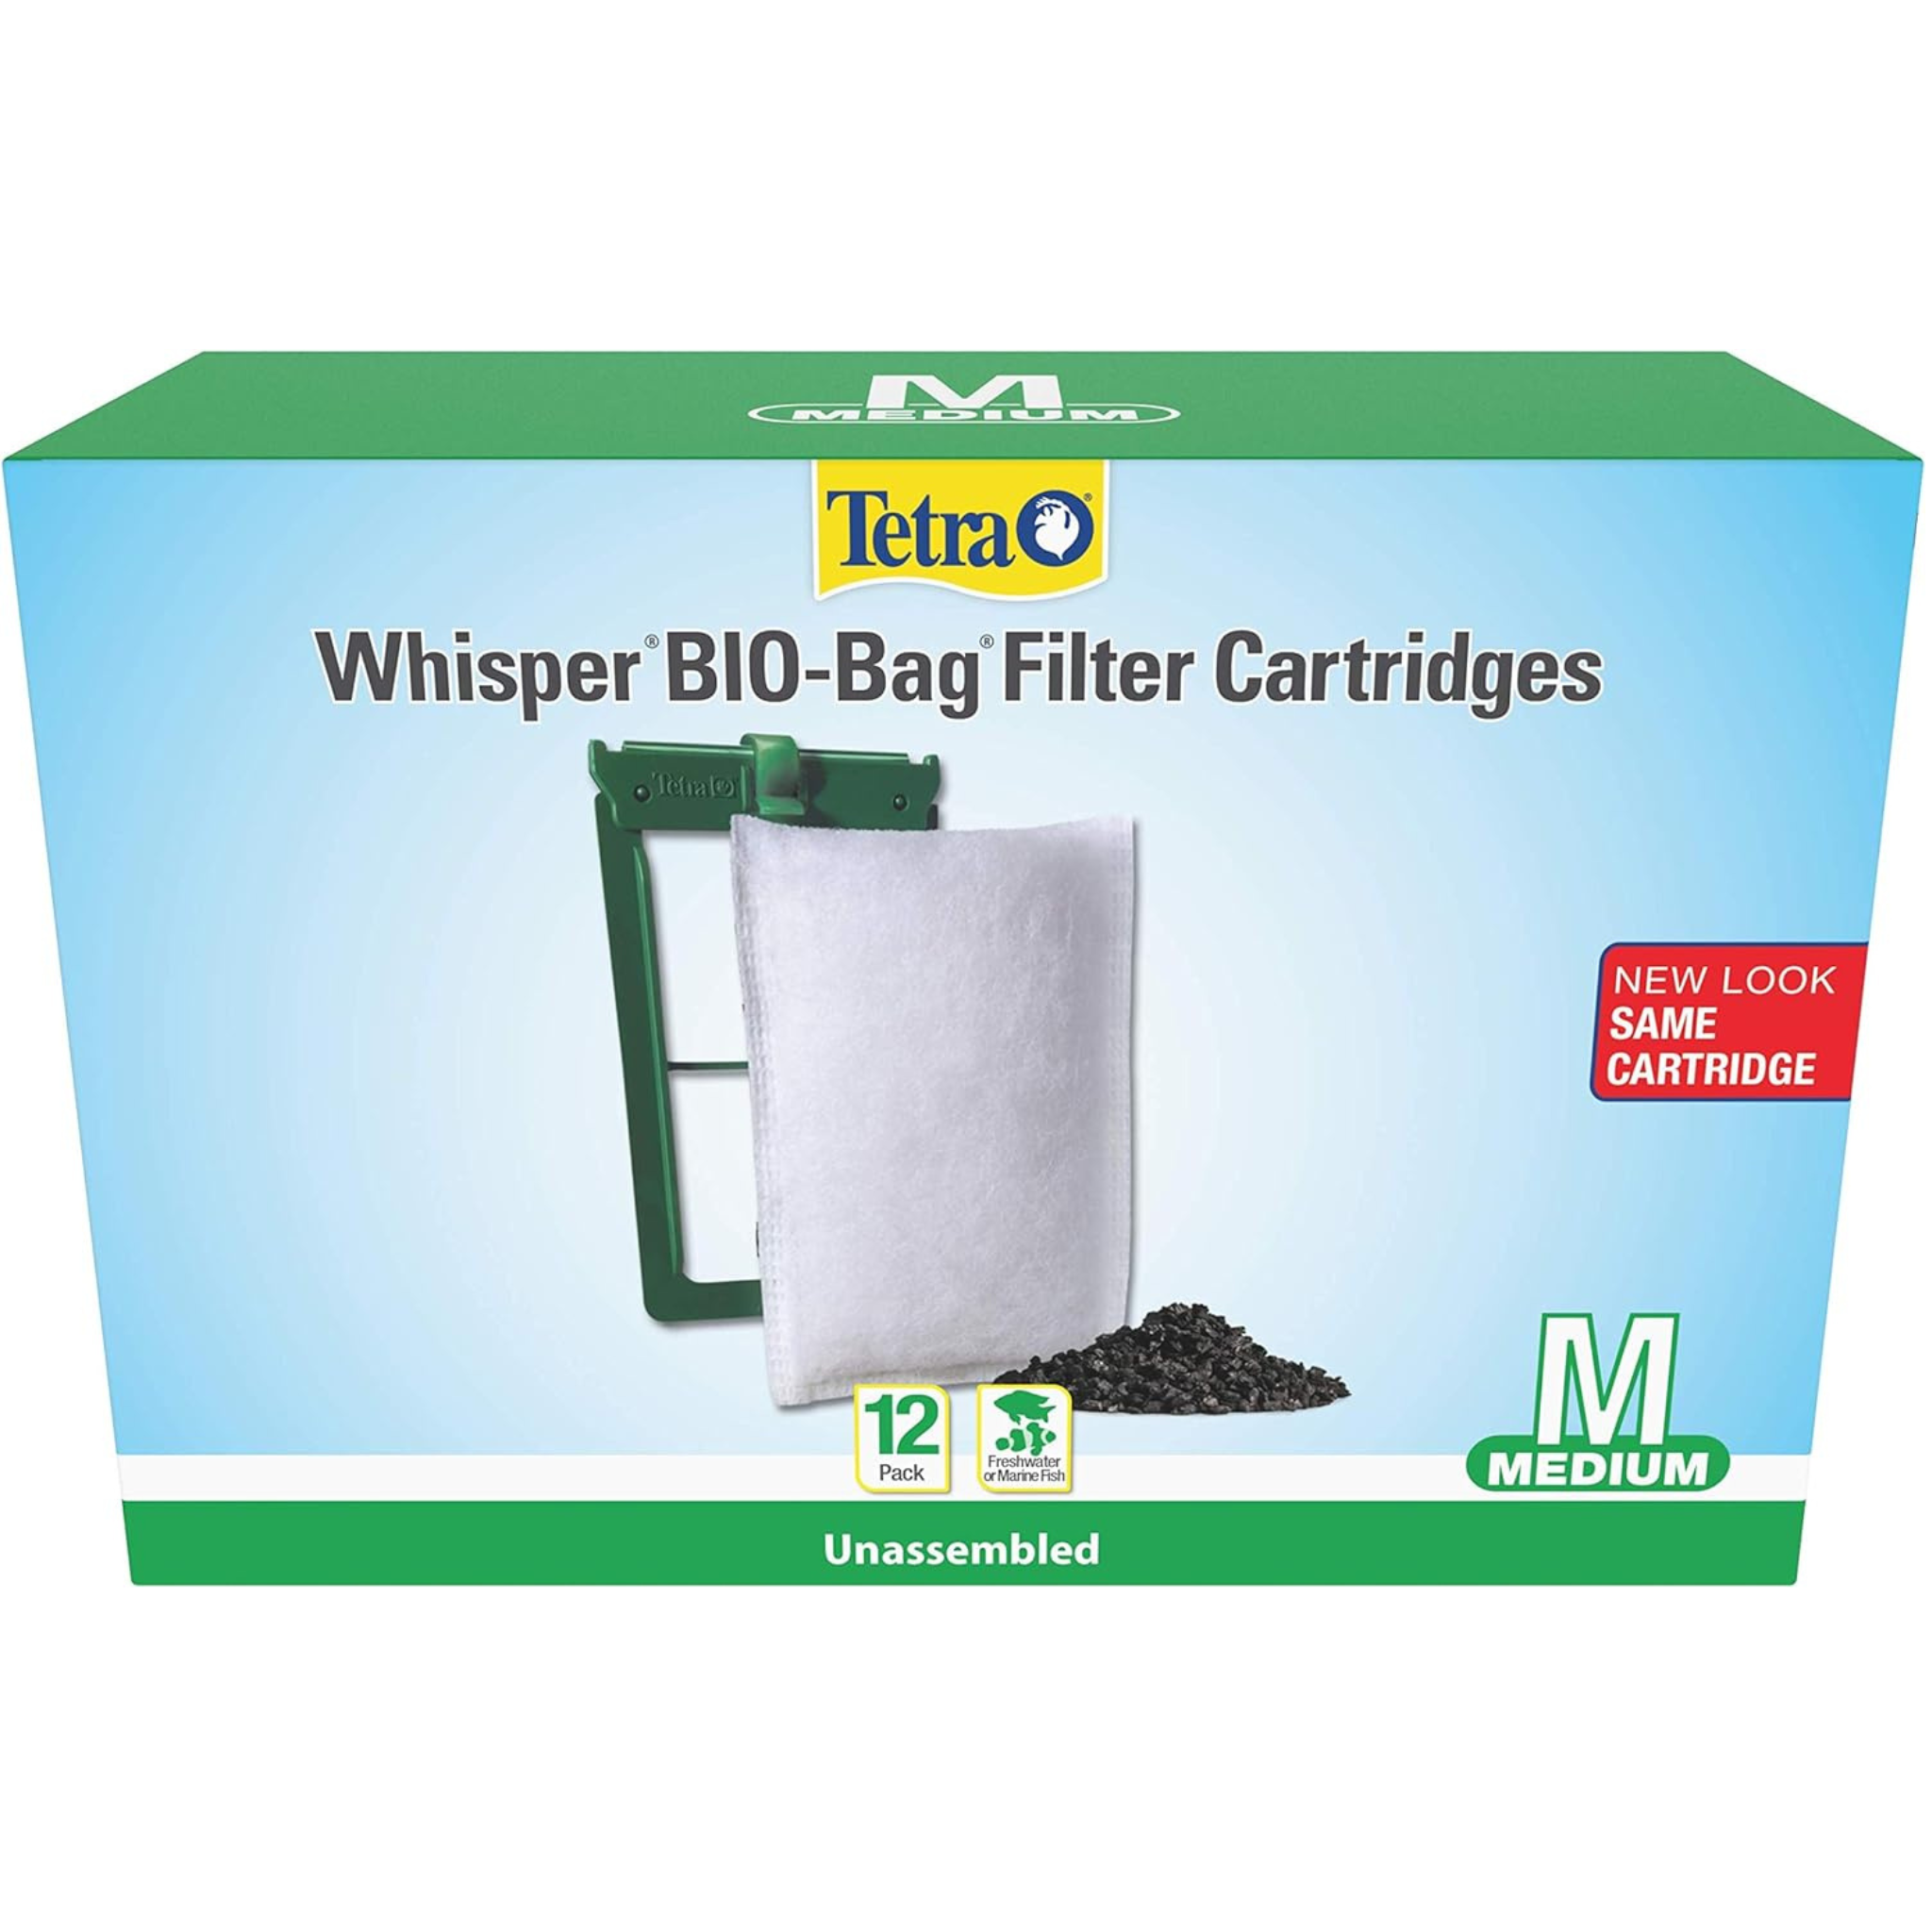 12-Pack Tetra Whisper Bio-Bag Filter Cartridges